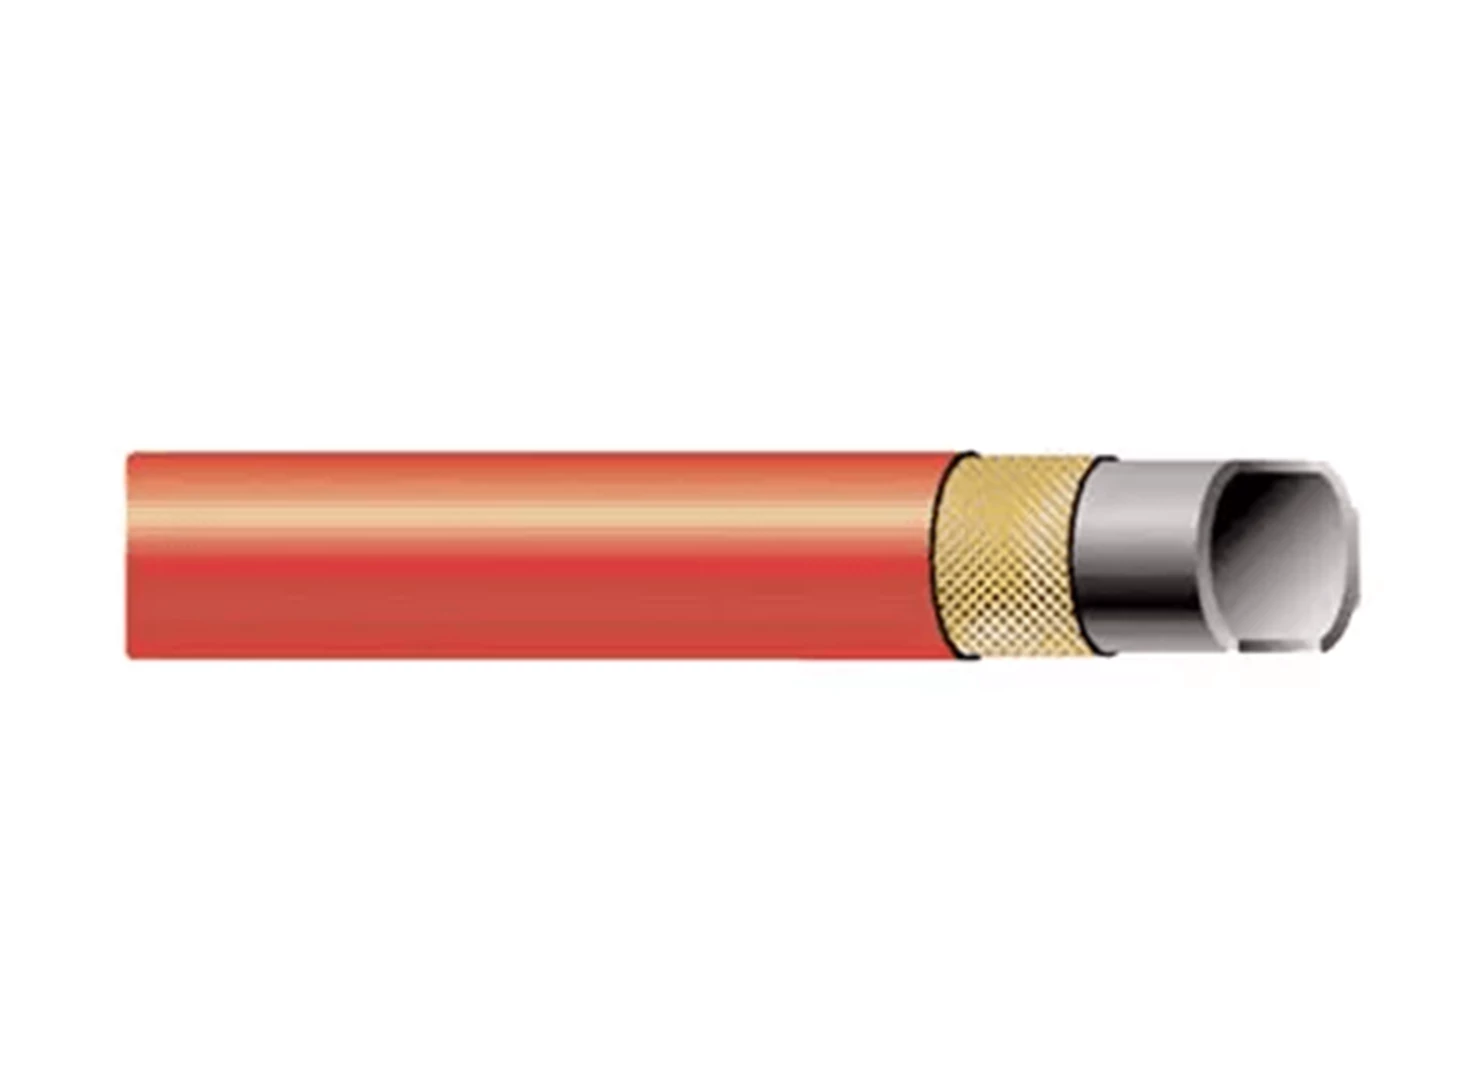 Product: Acetylene hose, 6.3mm